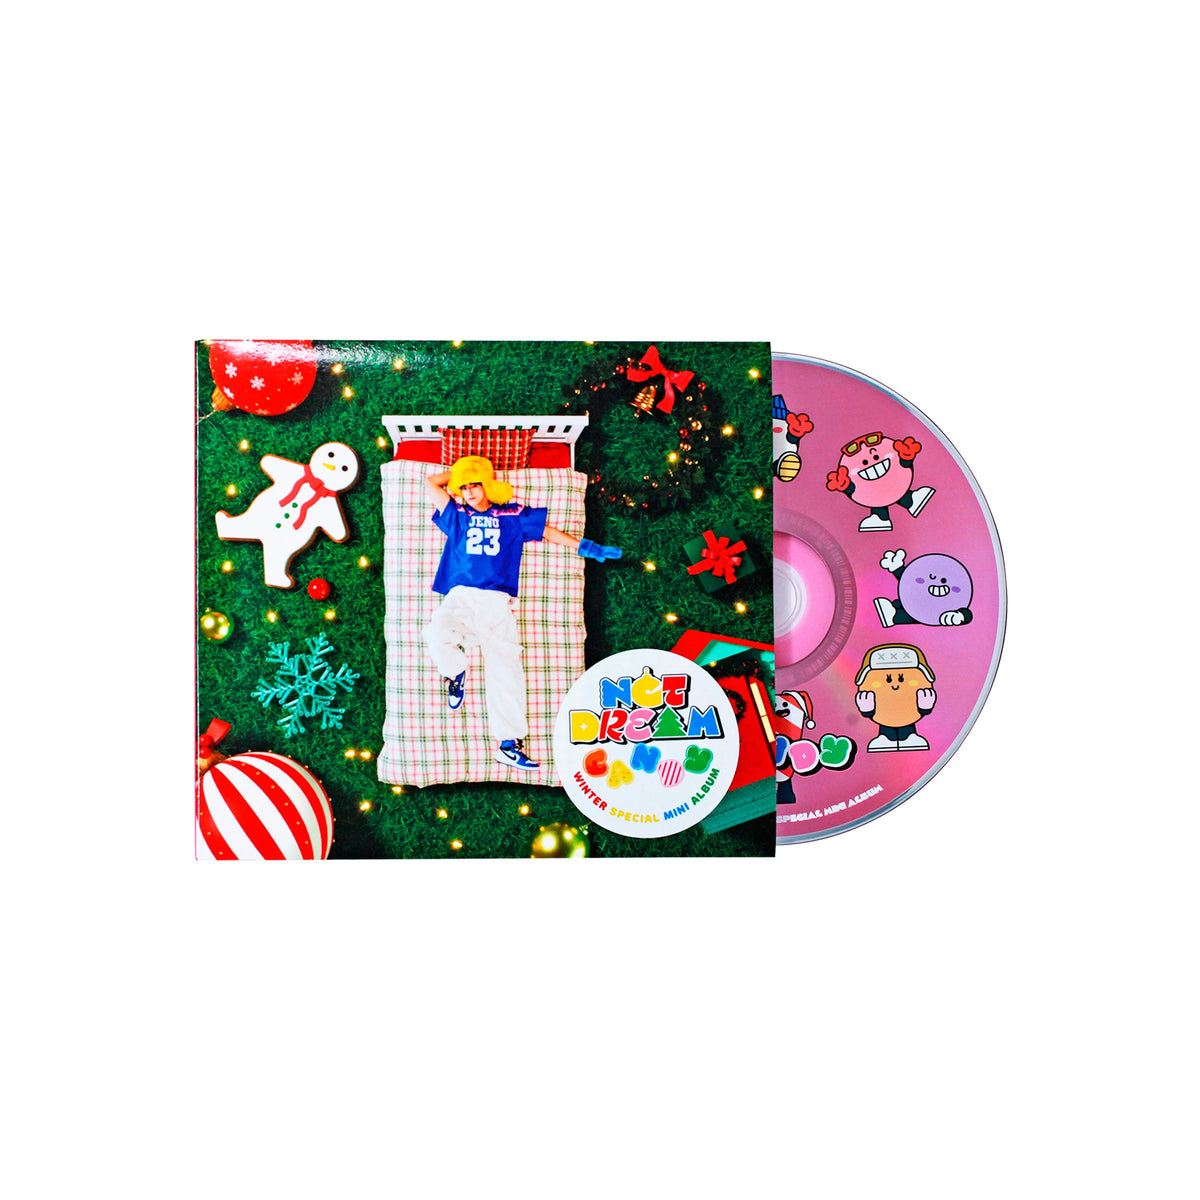 NCT DREAM Candy Winter Special Mini Album Digipack Version Jeno Ver main image